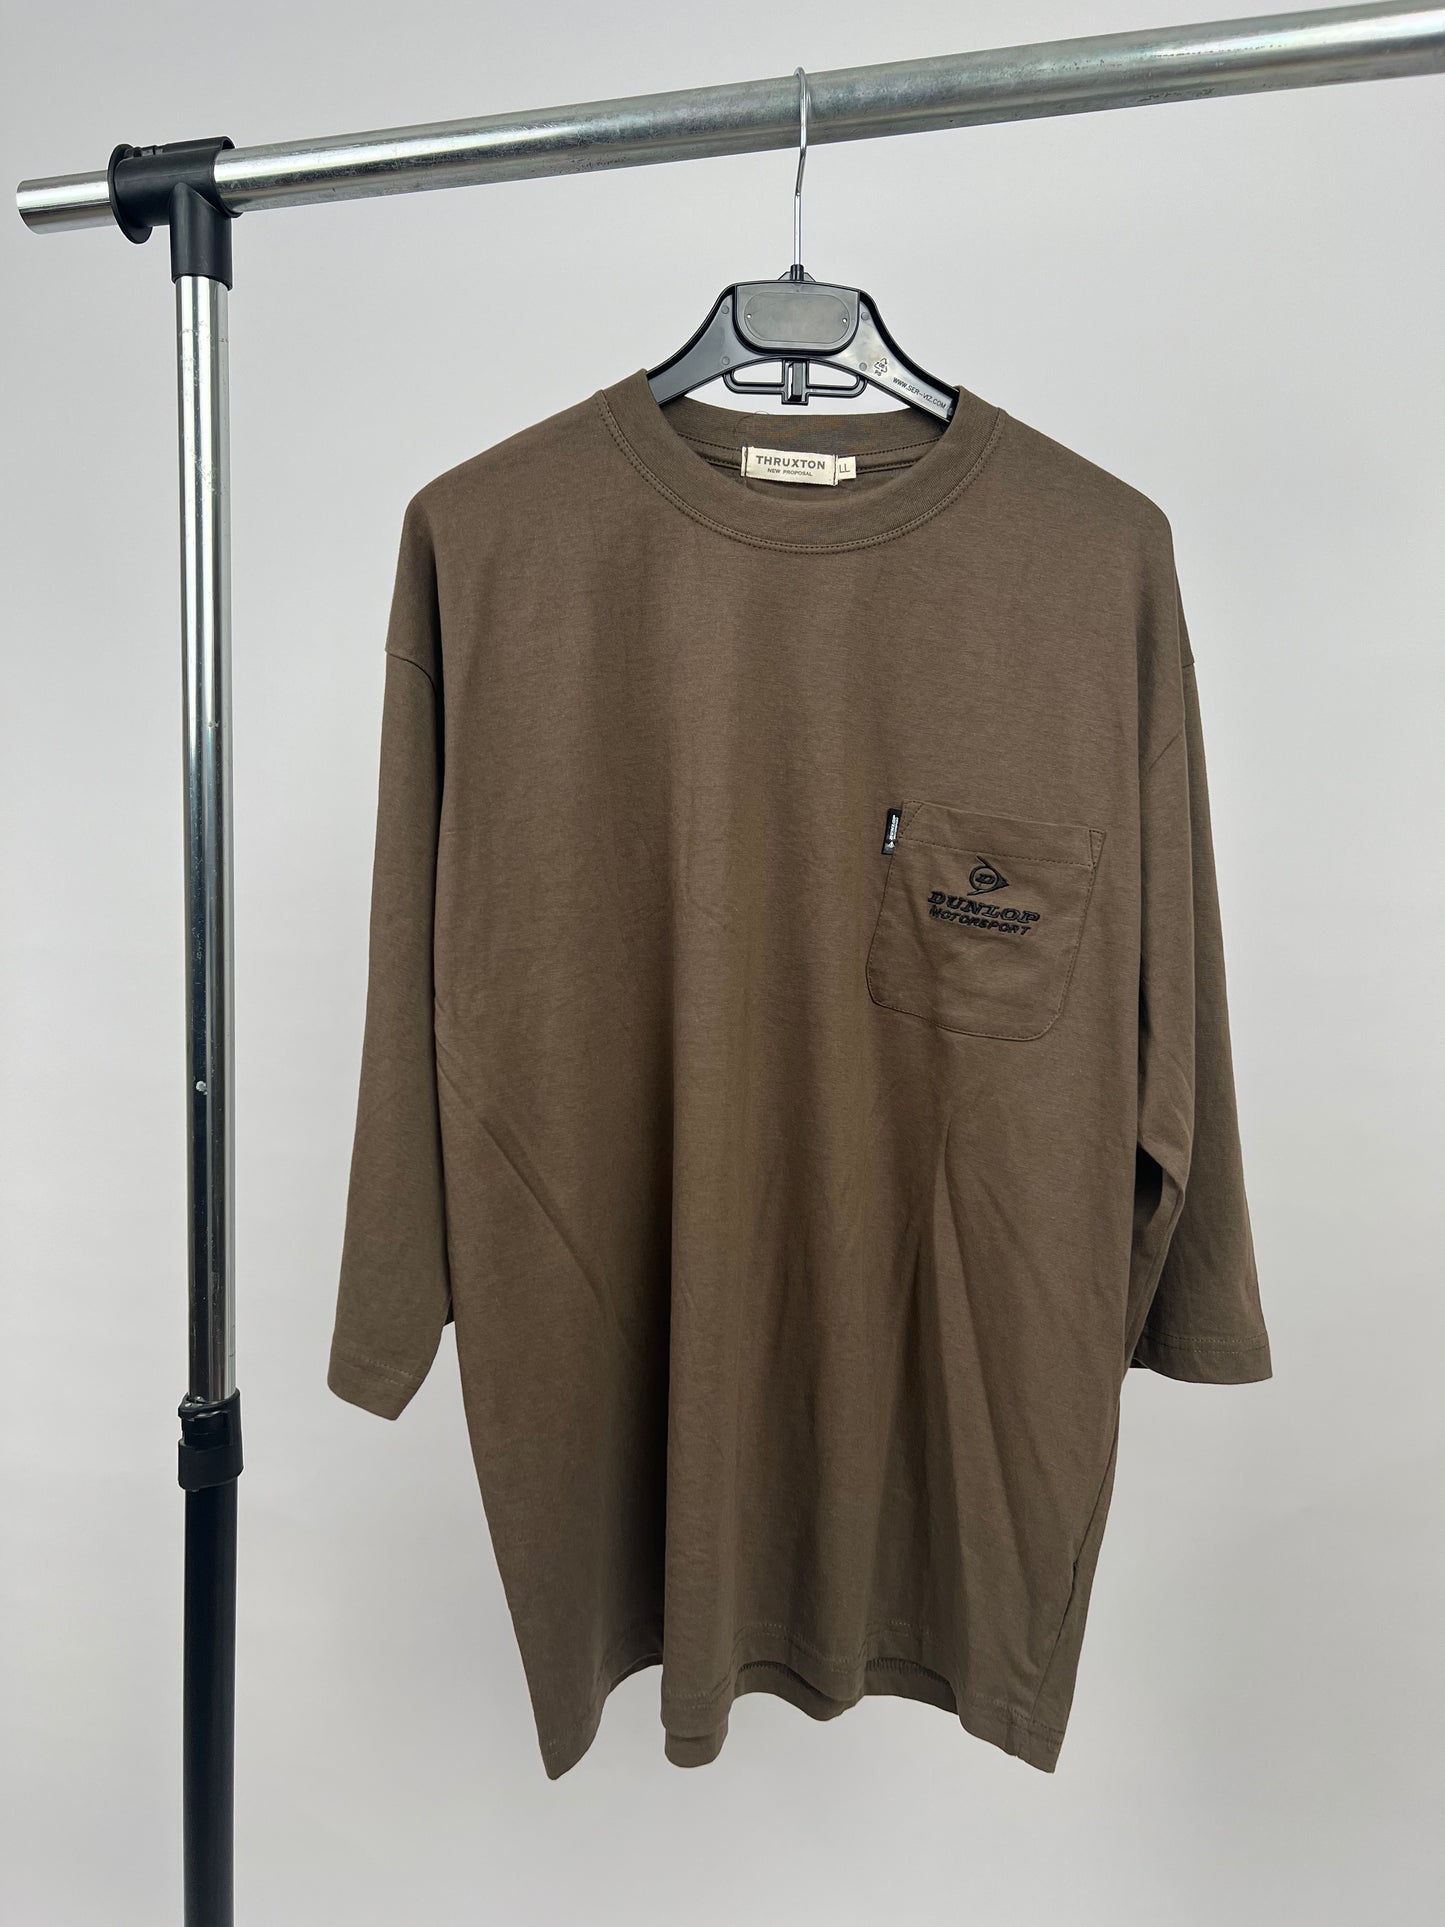 Dunlop quarter sleeve pocket T-shirt in brown